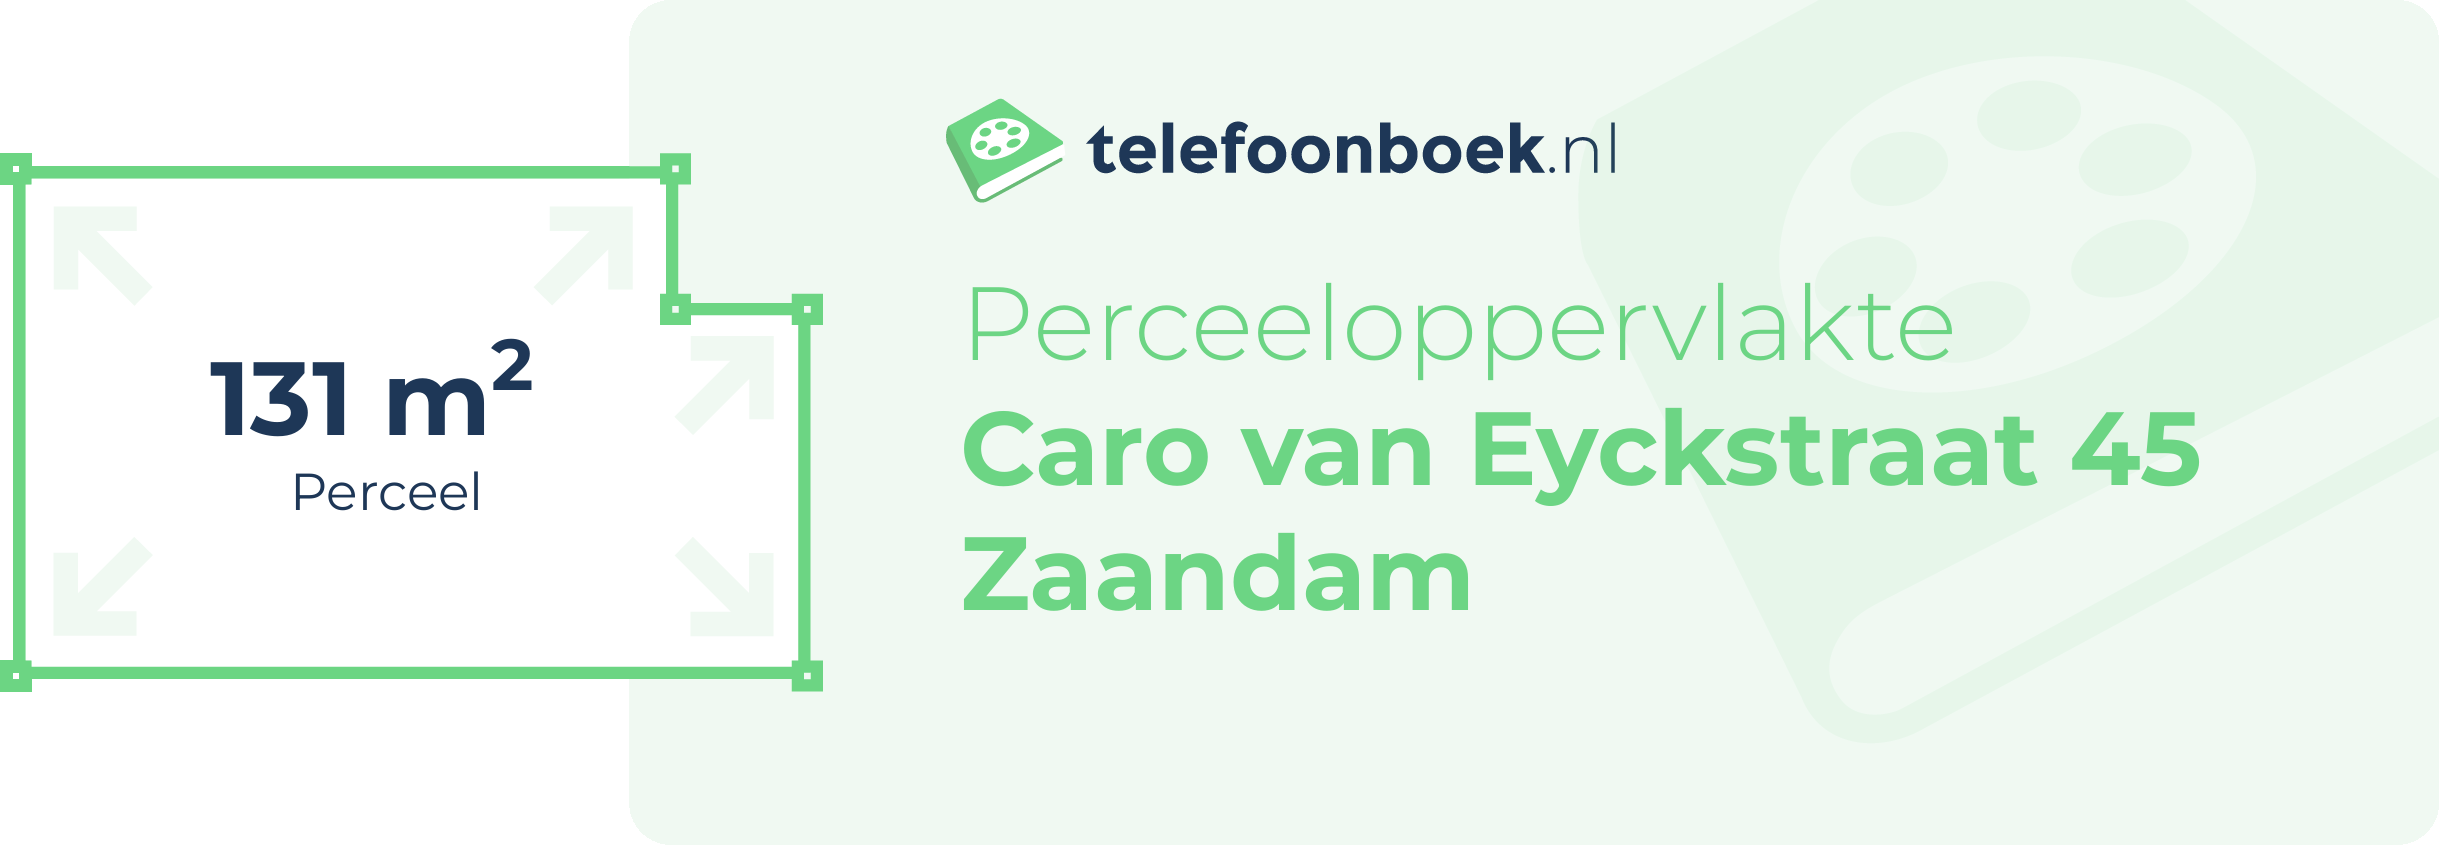 Perceeloppervlakte Caro Van Eyckstraat 45 Zaandam